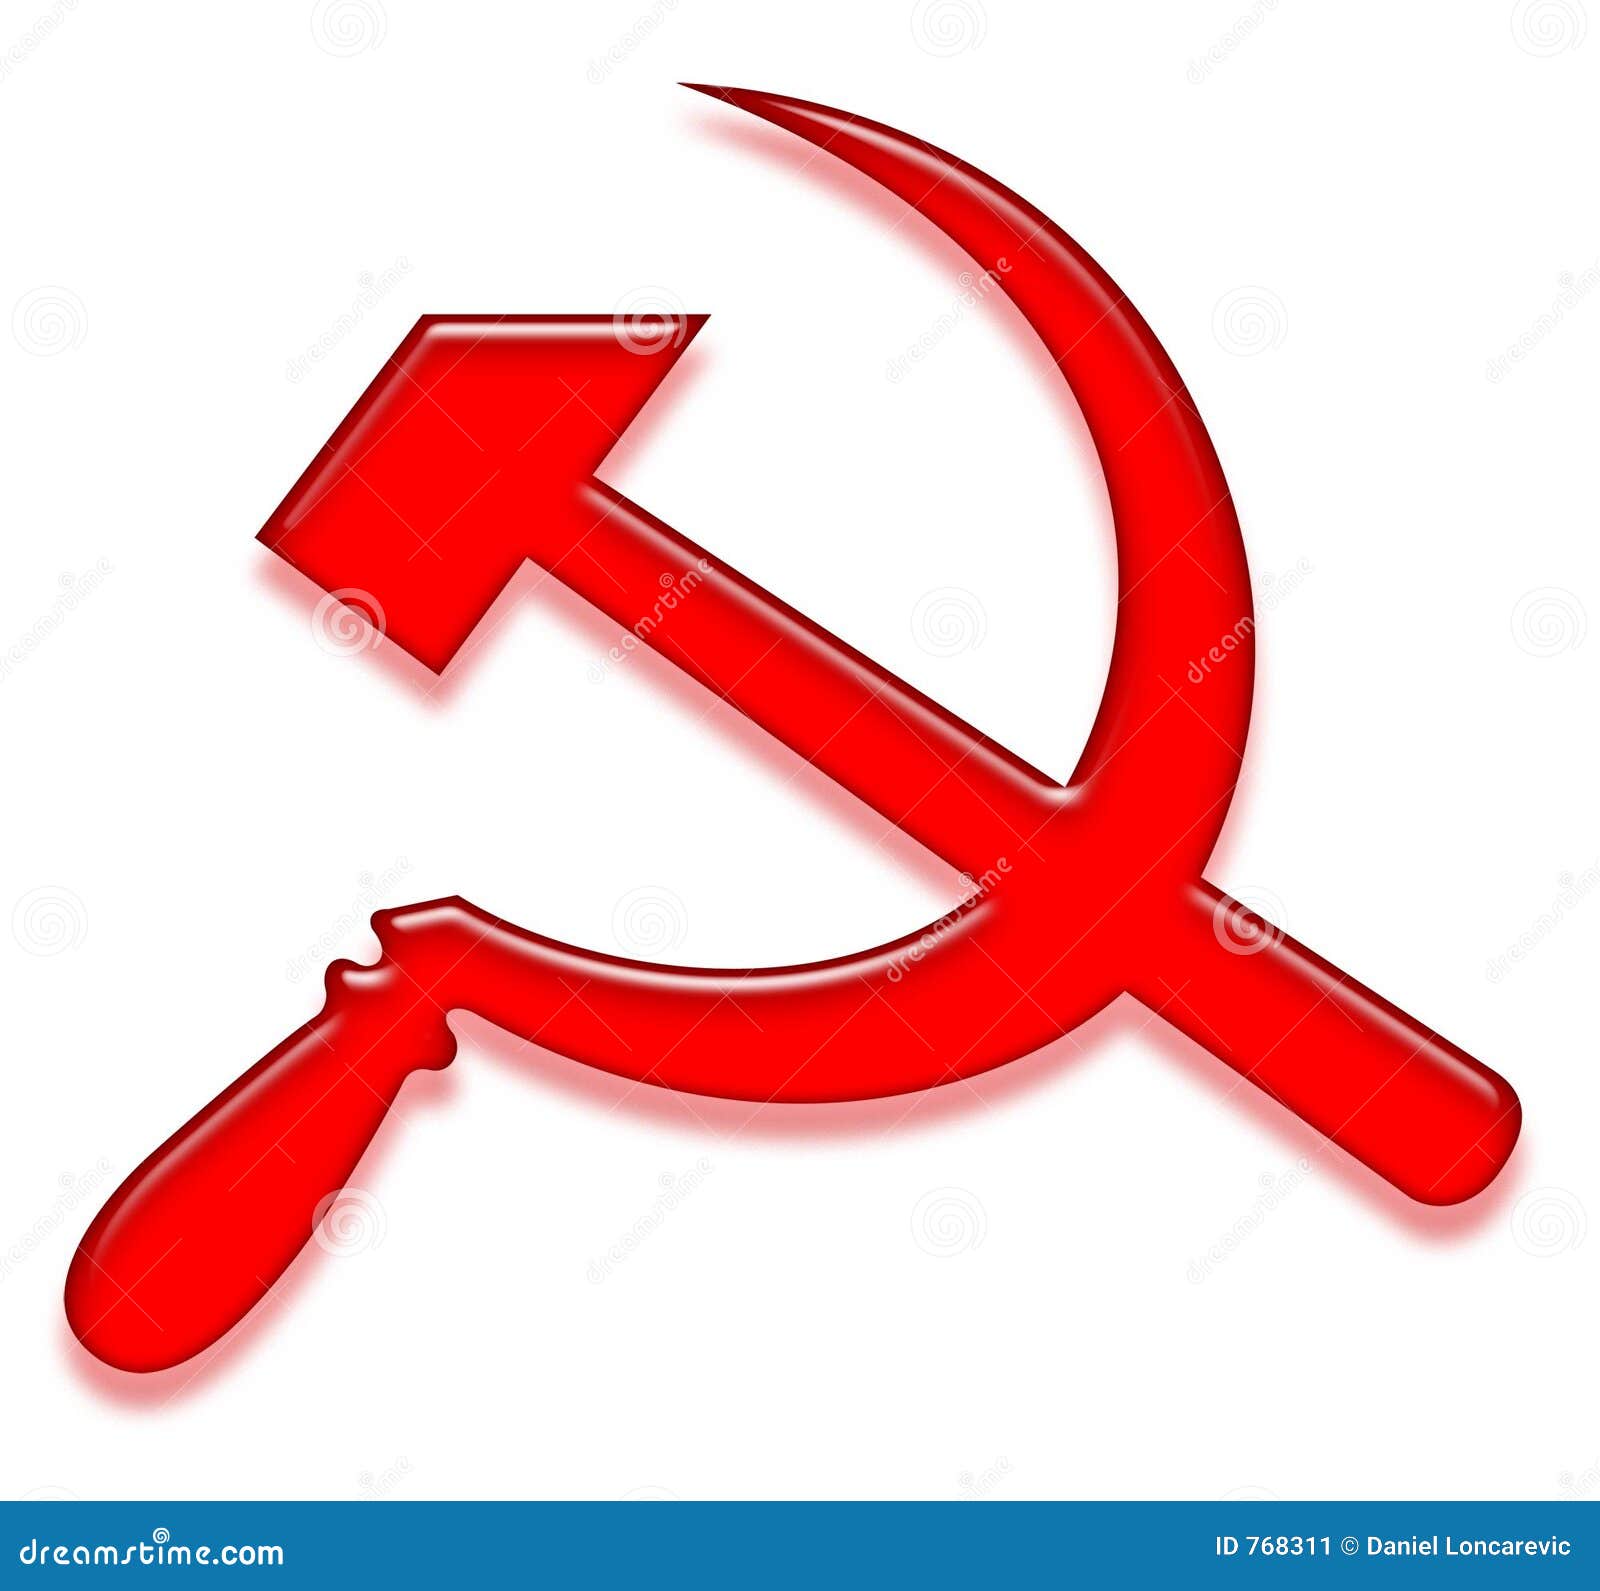 communist sign